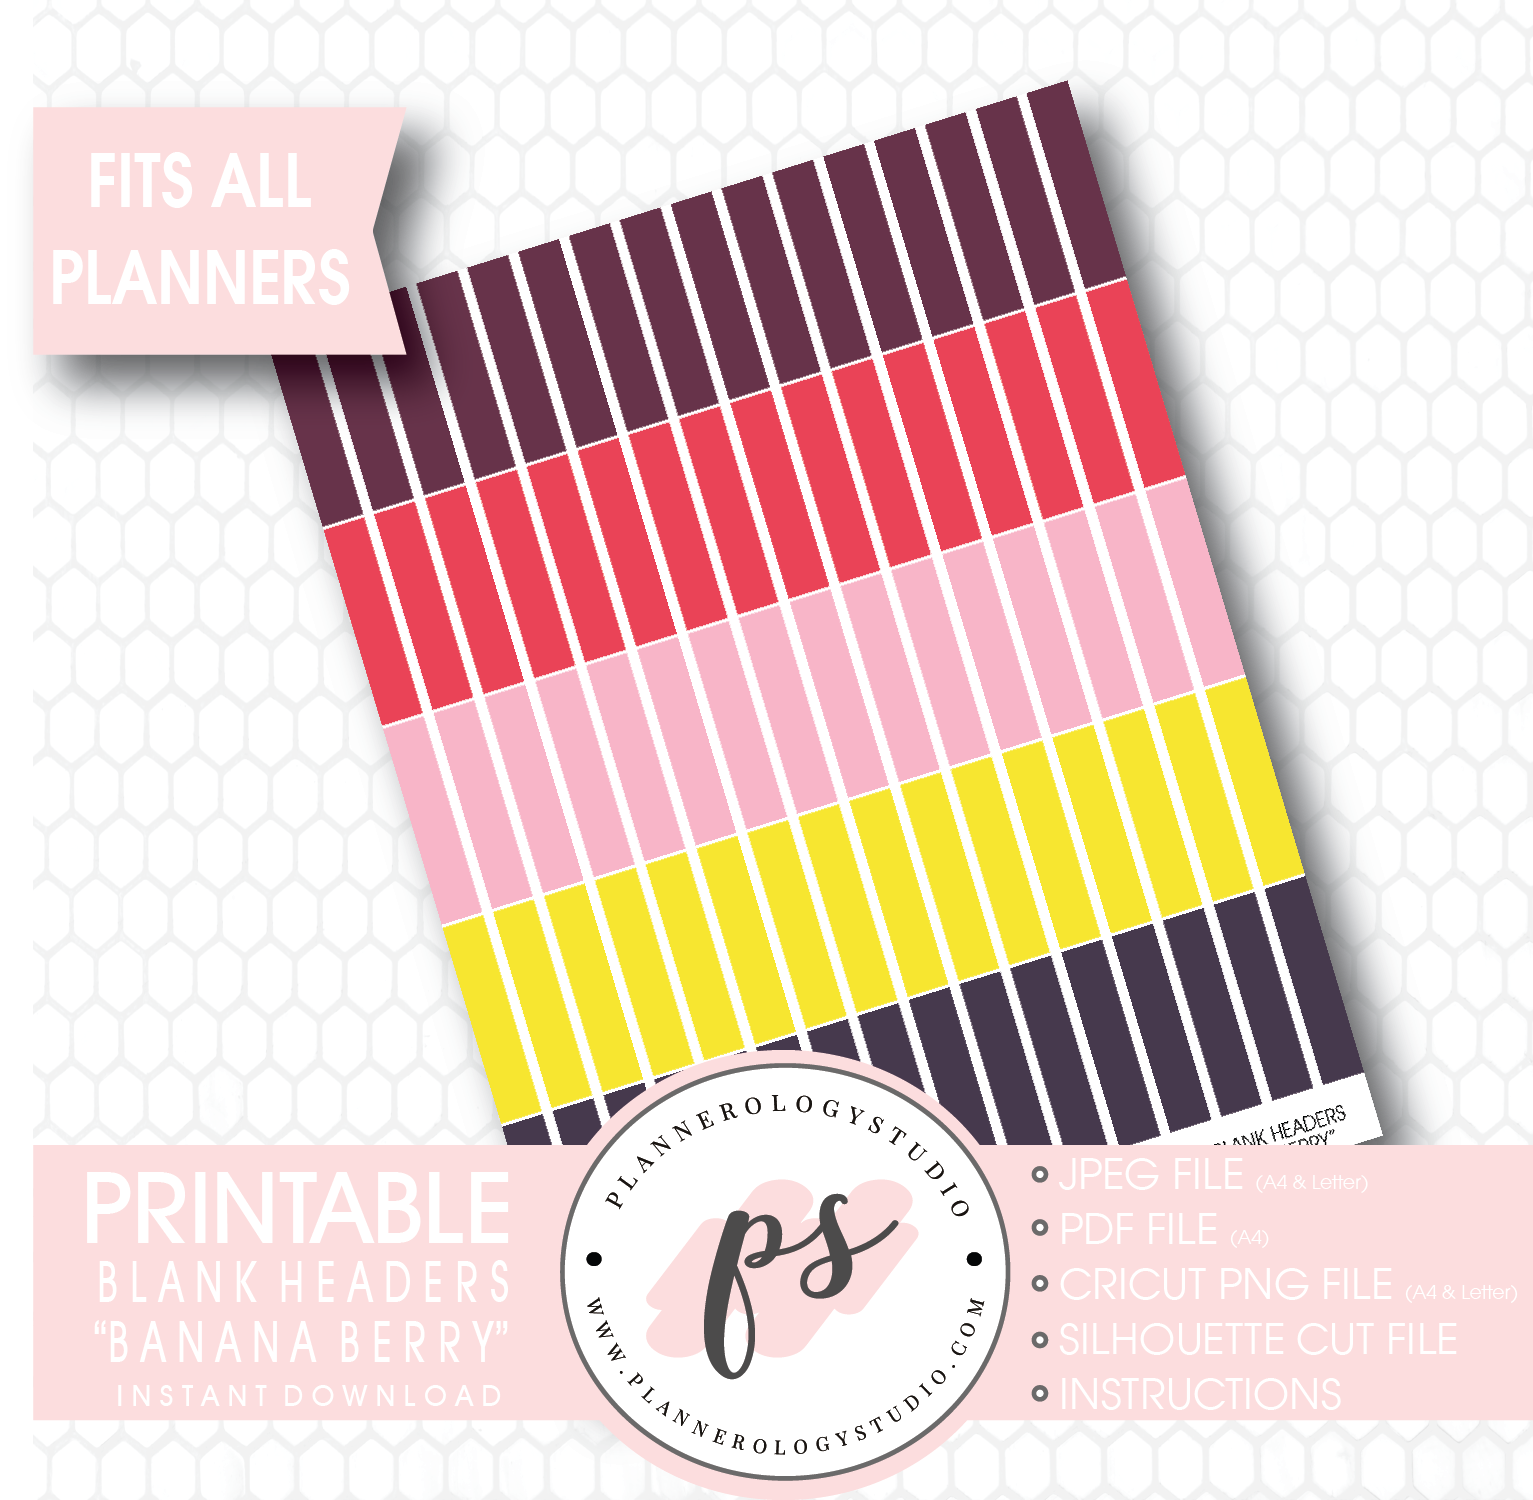 "Banana Berry" Blank Header Printable Planner Stickers - Plannerologystudio